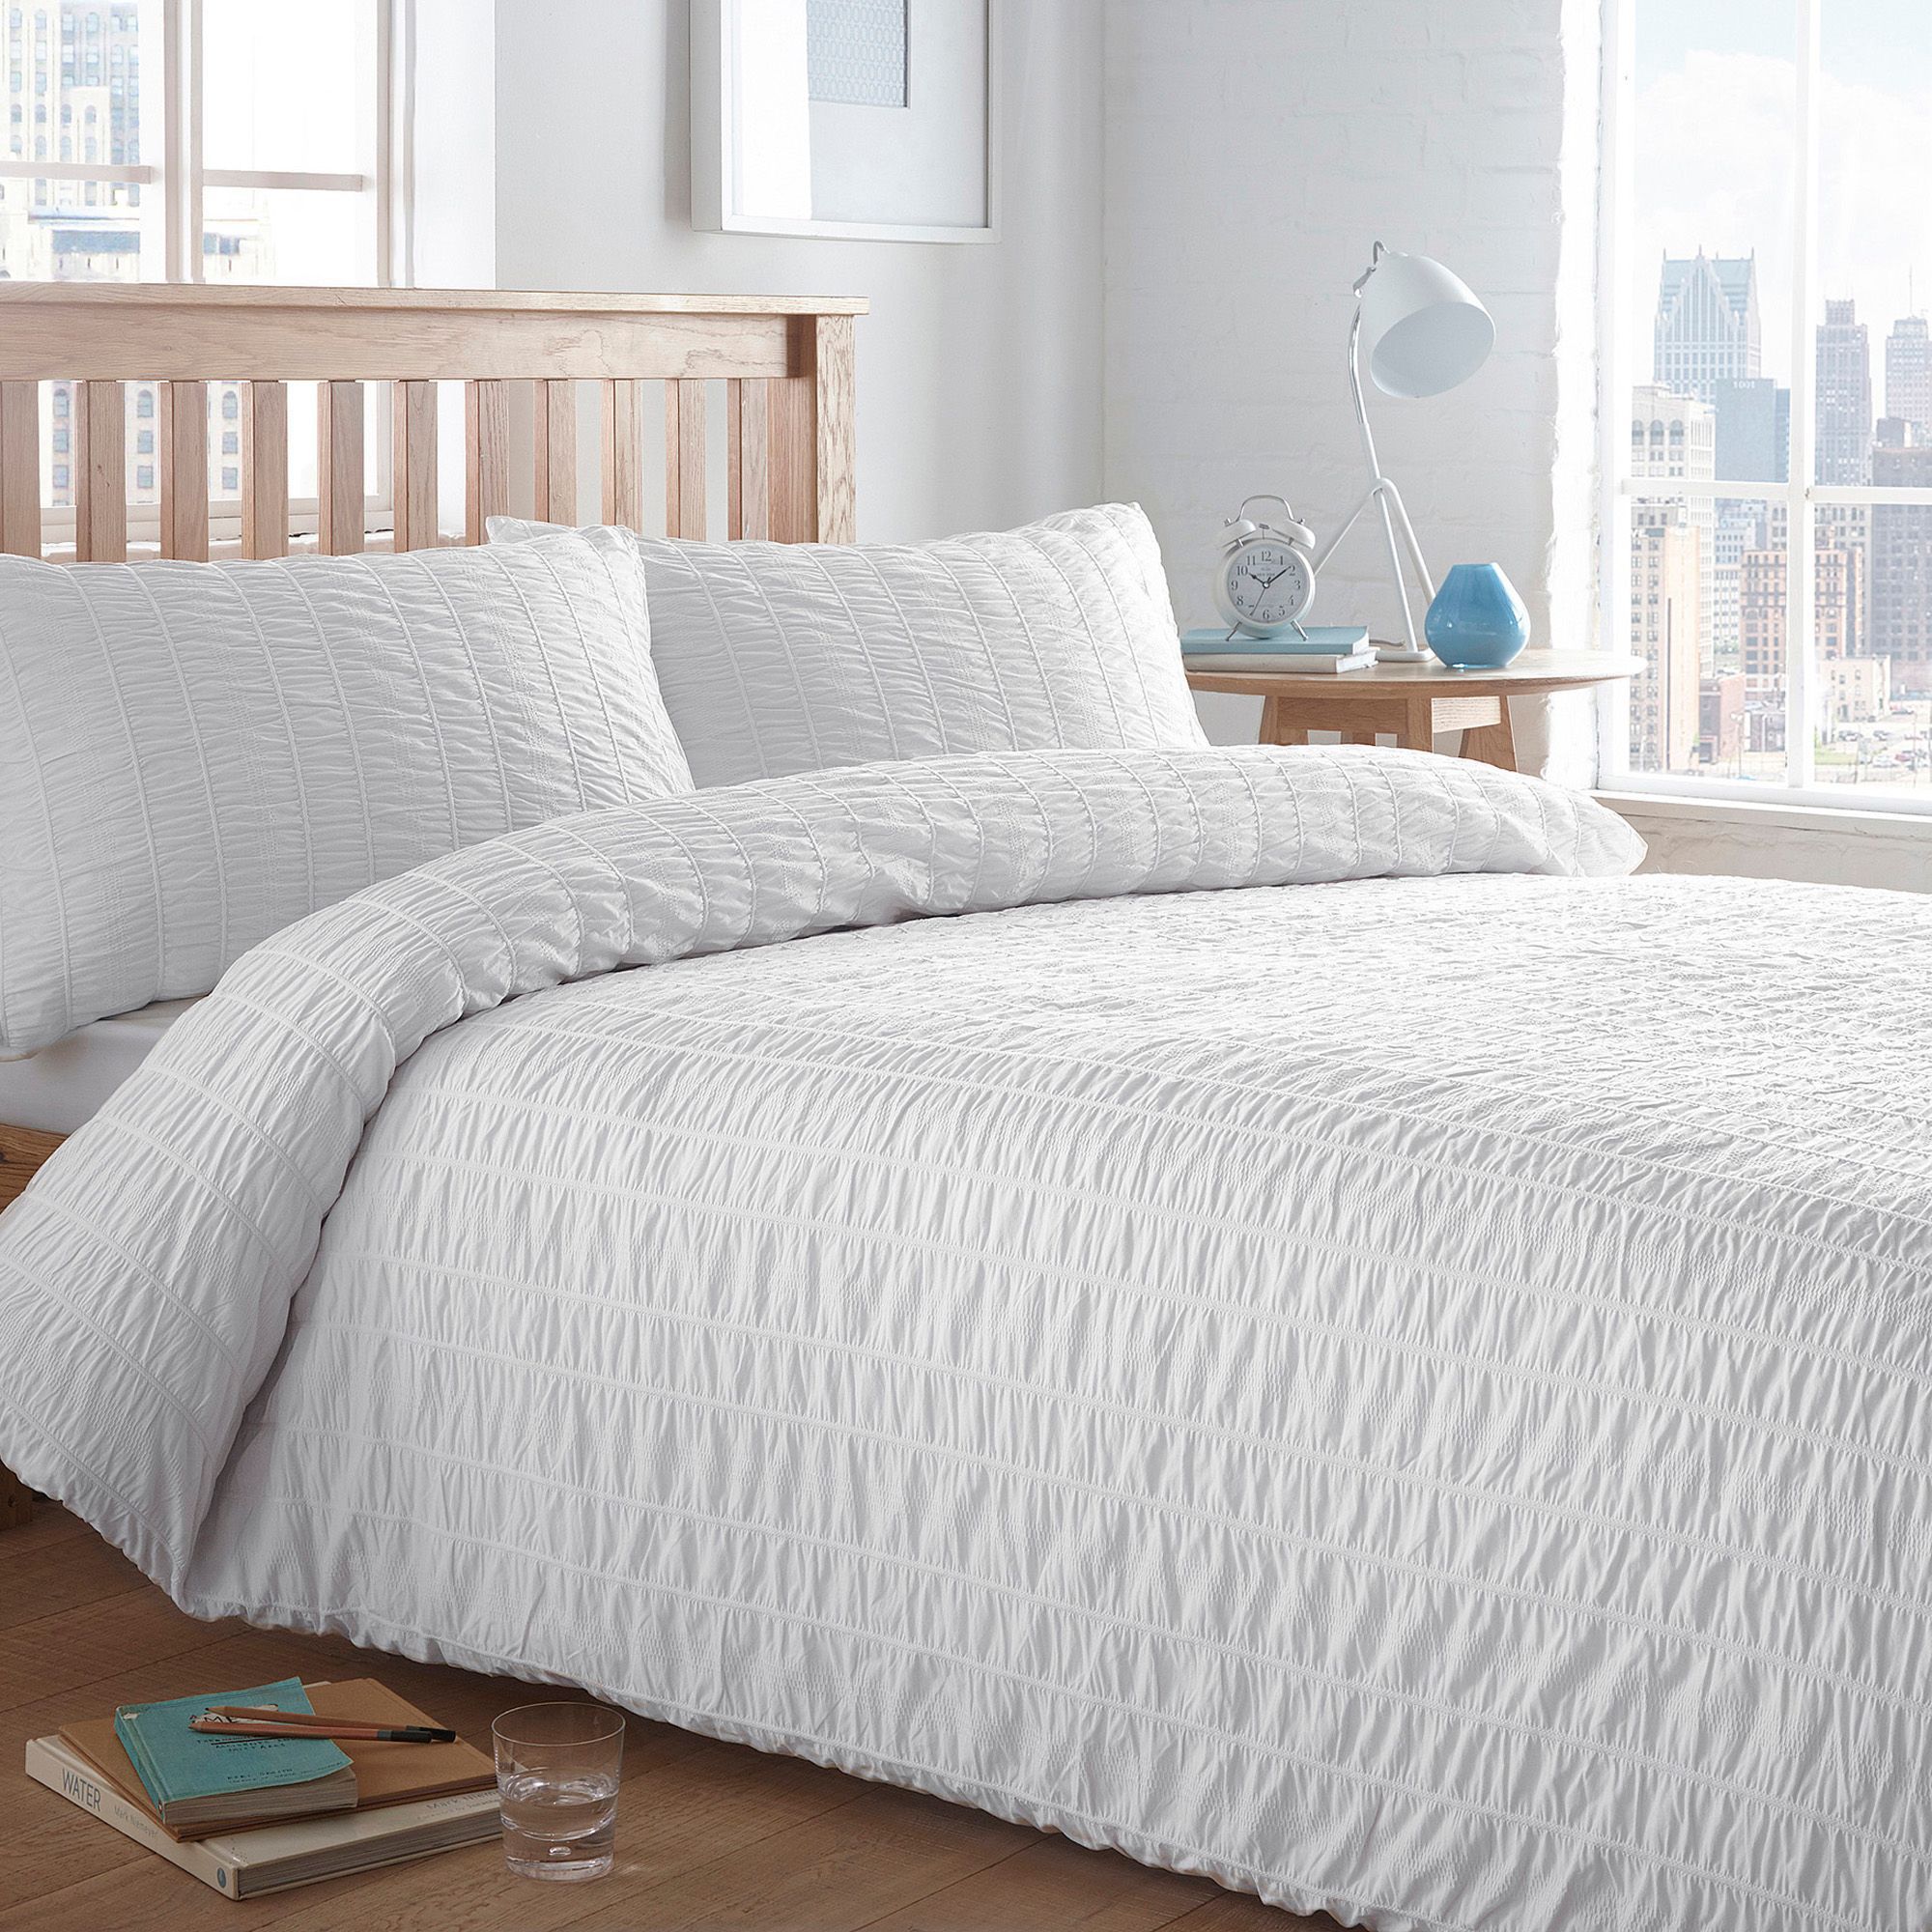 Home Collection Basics Cream Textured 'Seersucker' Bedding Set From Debenhams eBay